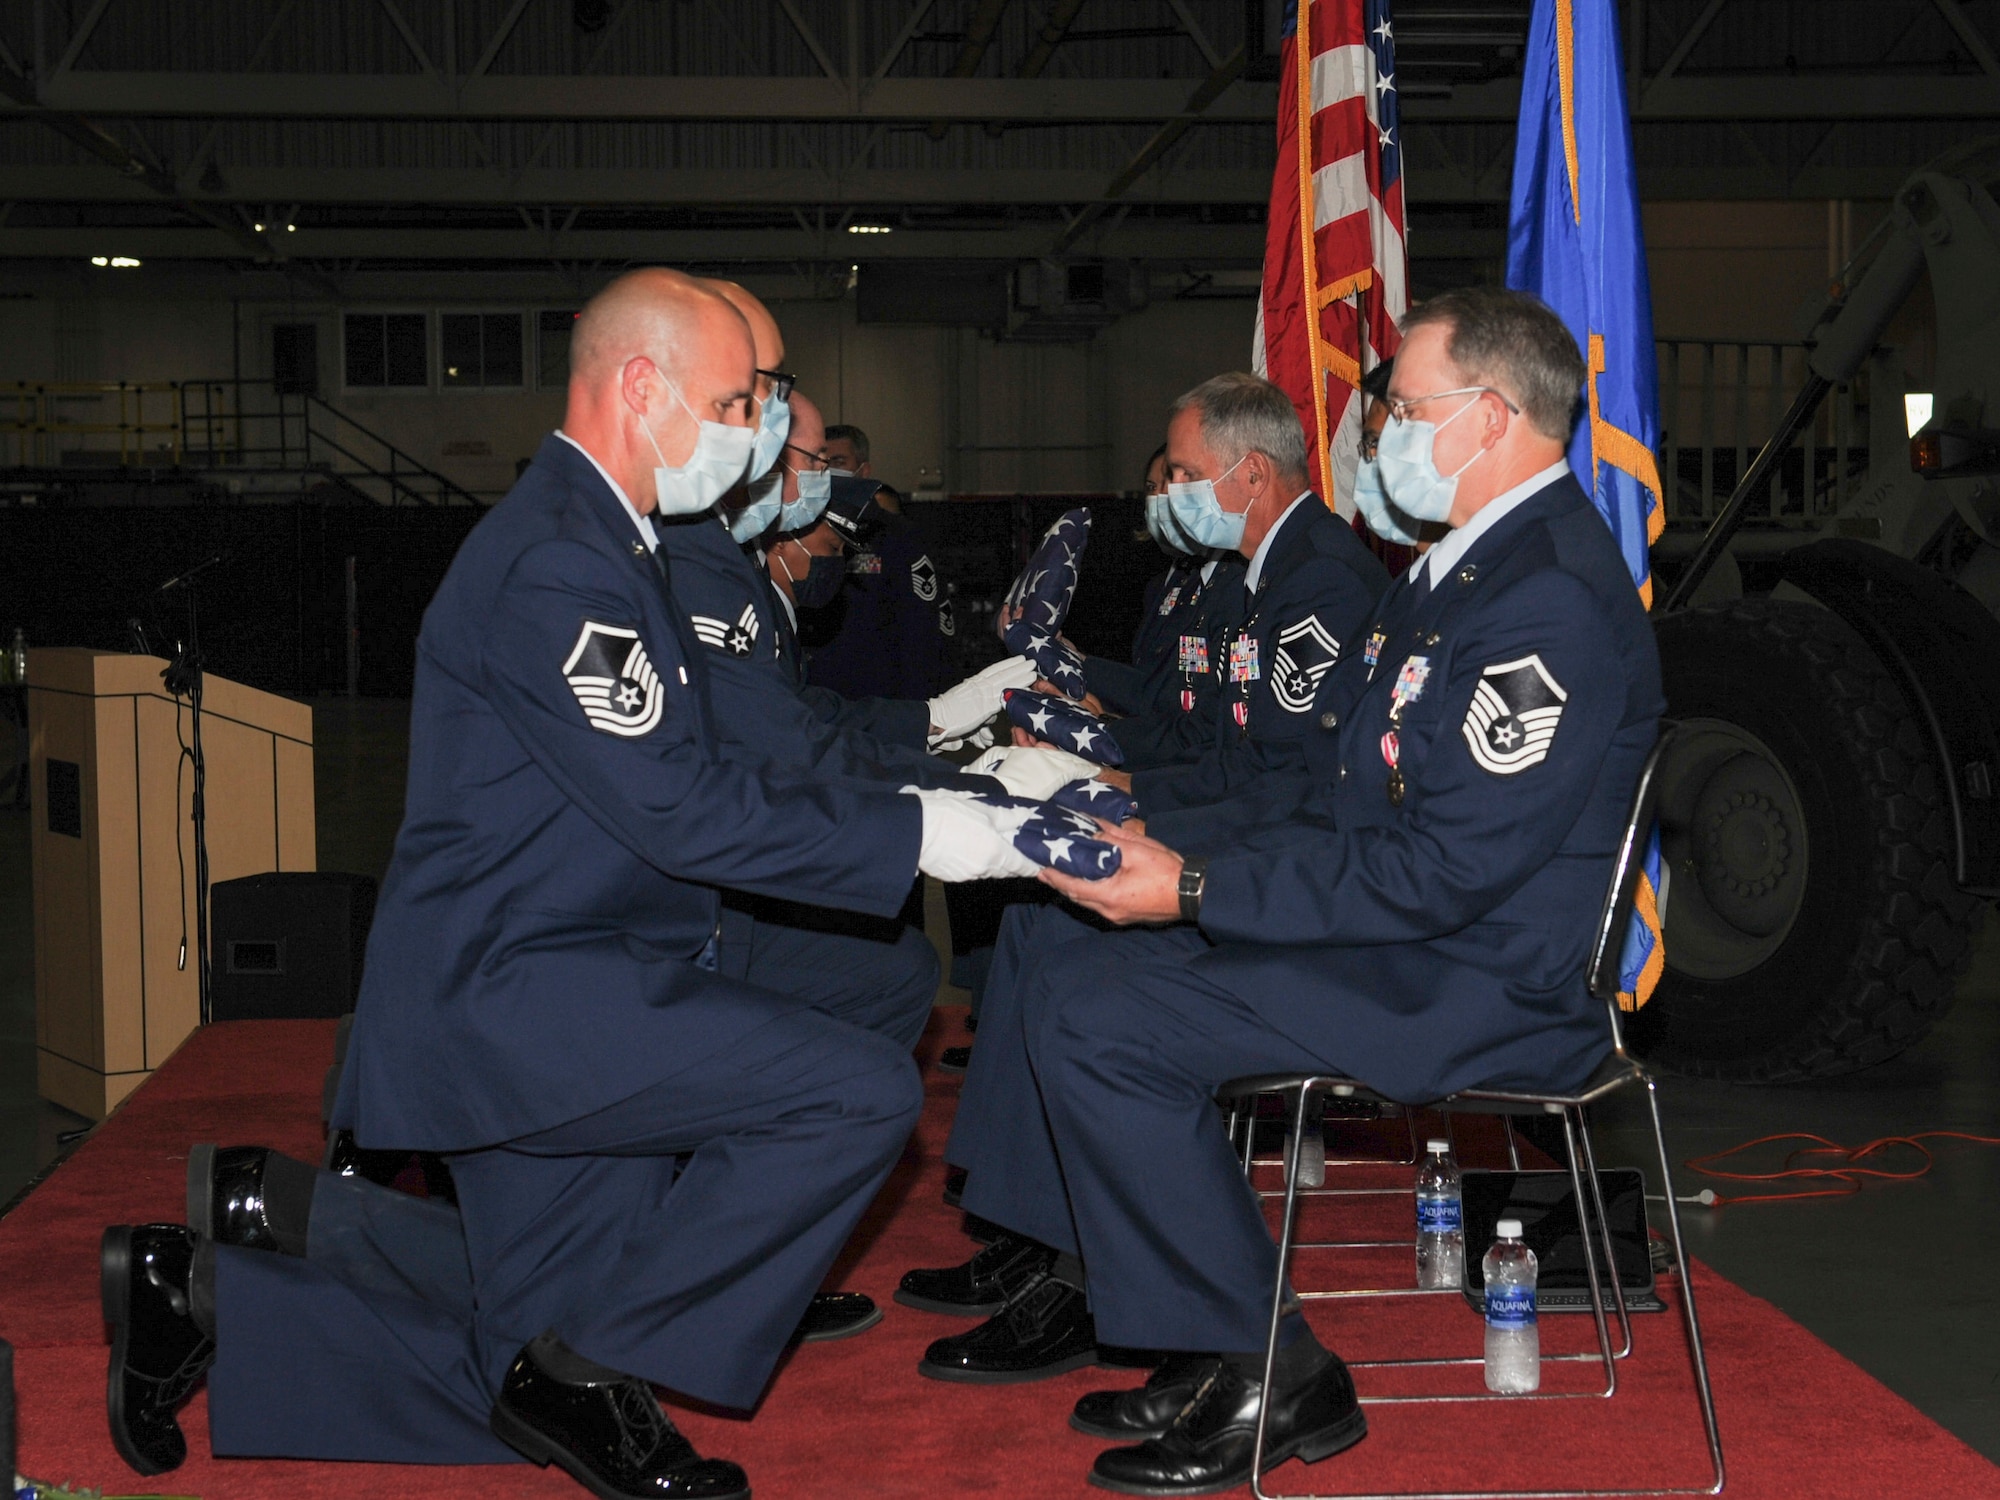 86th APS retires five Reserve Citizen Airmen in a group retirement ceremony